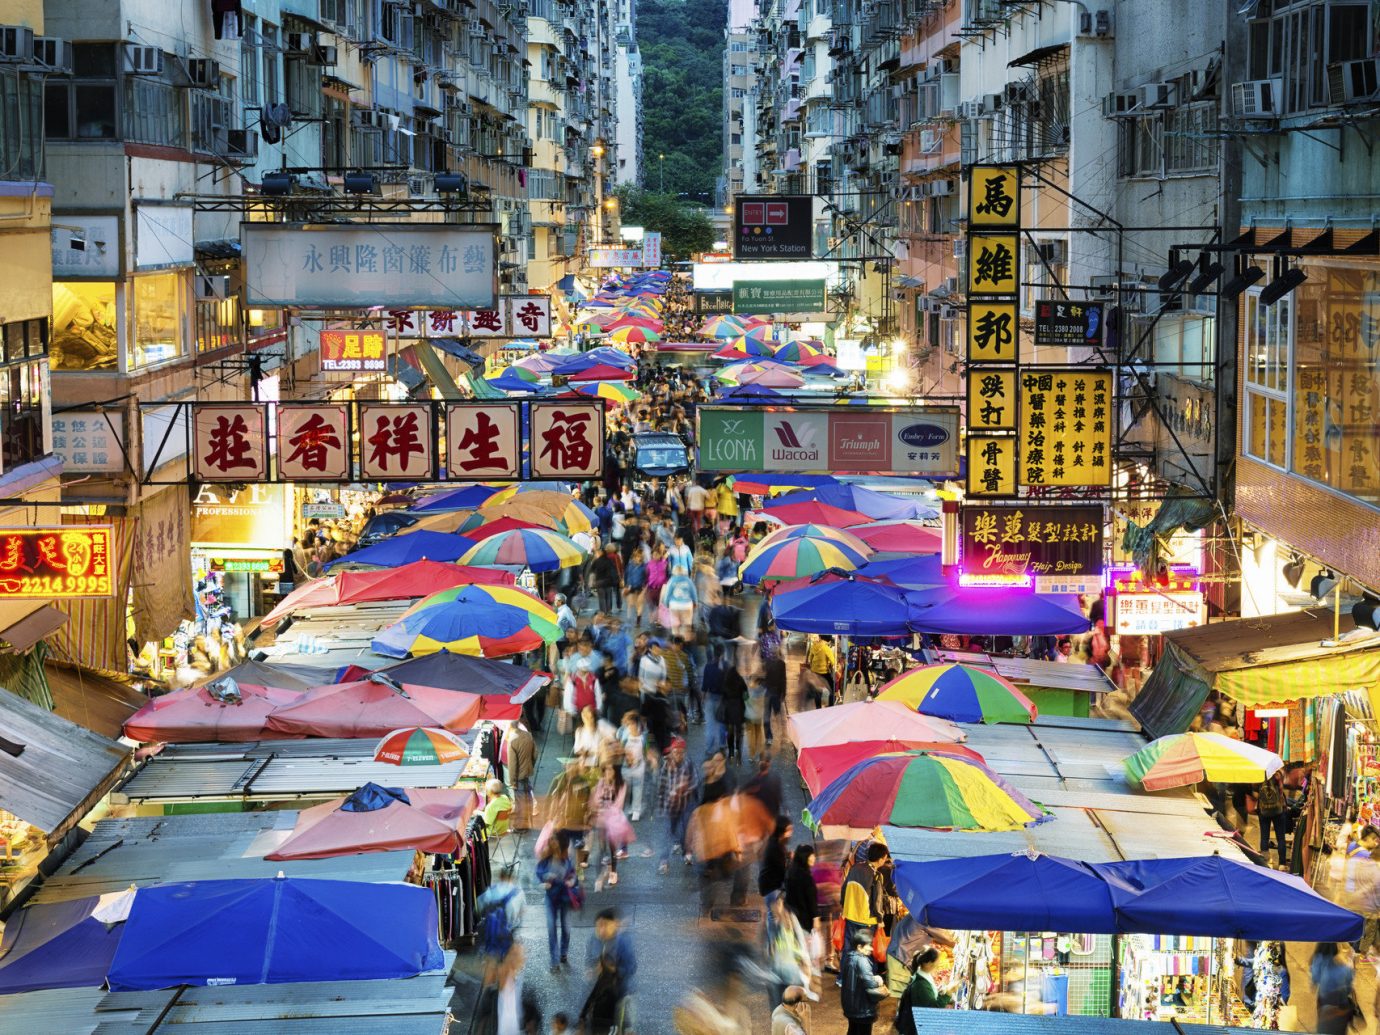 Busy market in Hong Kong